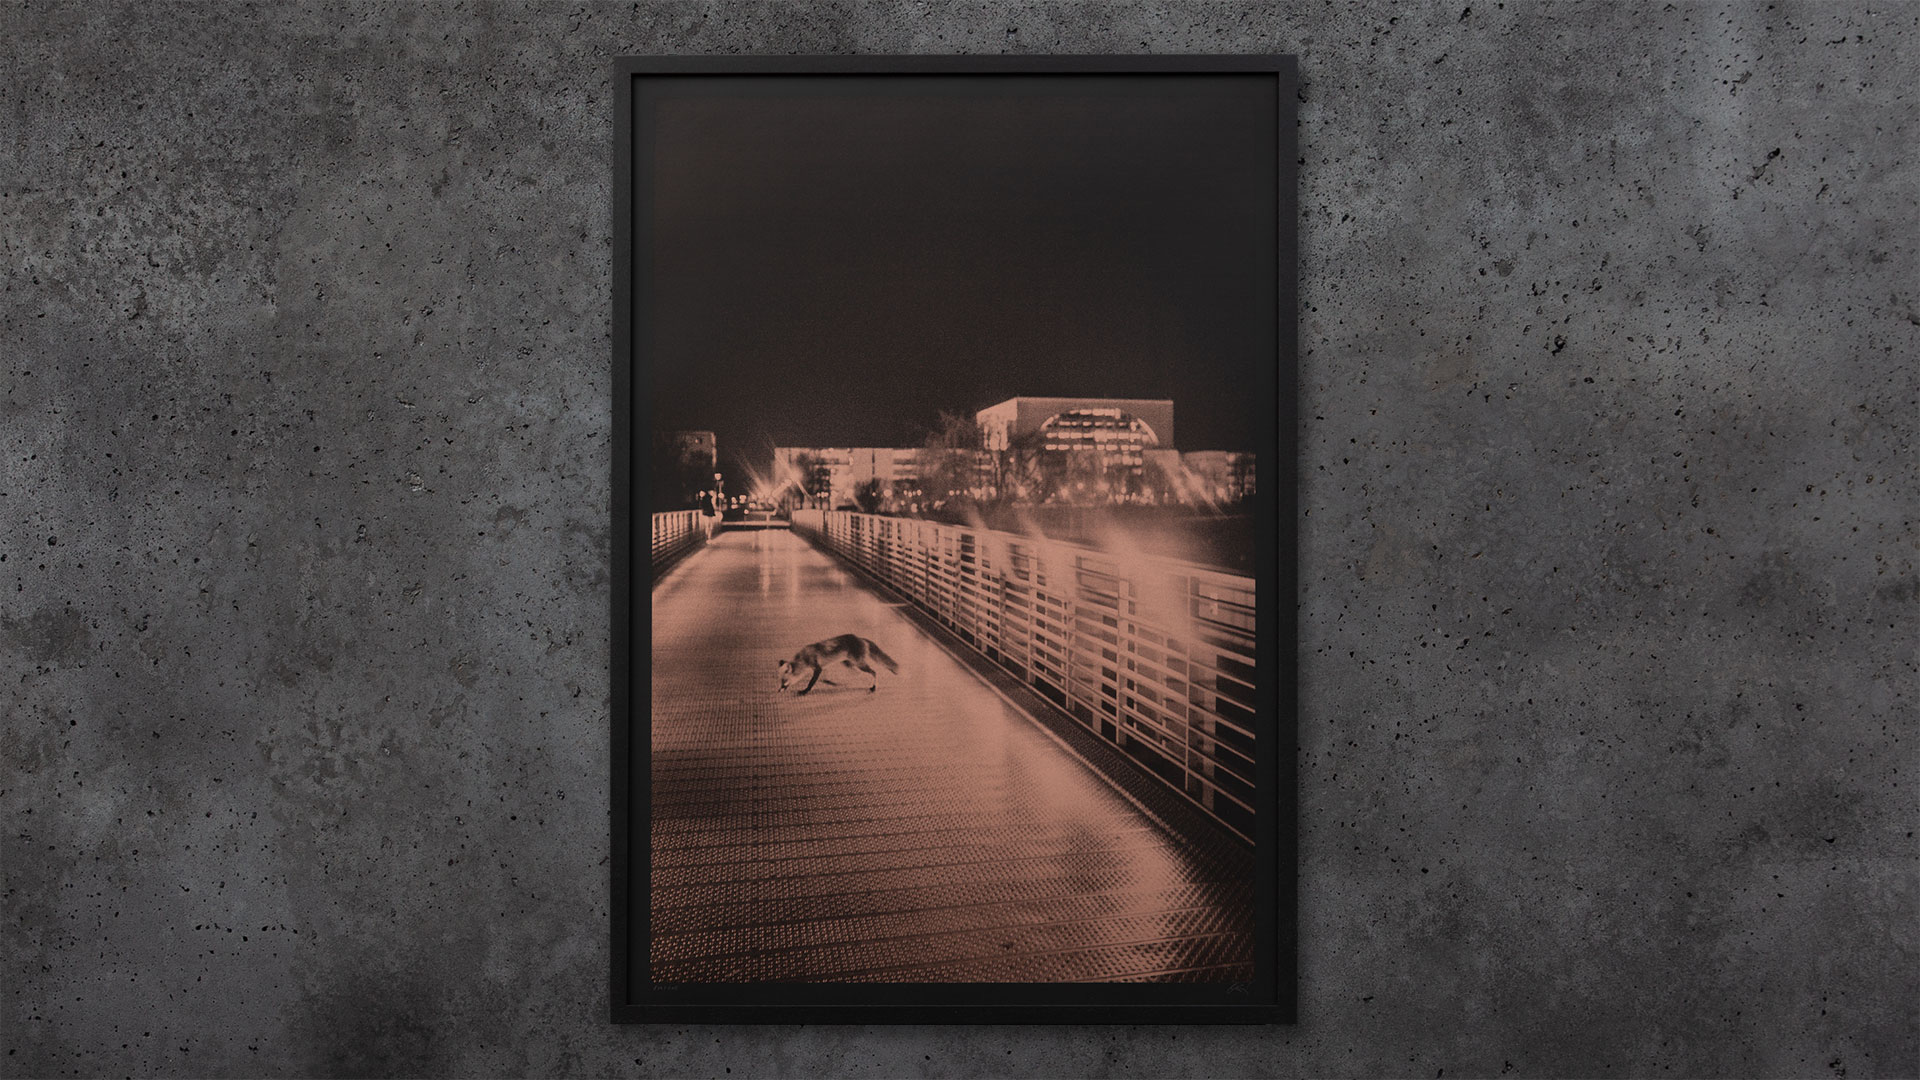 Christian Reister: photobook "Nacht & Nebel", Berlin night photography in Black & White